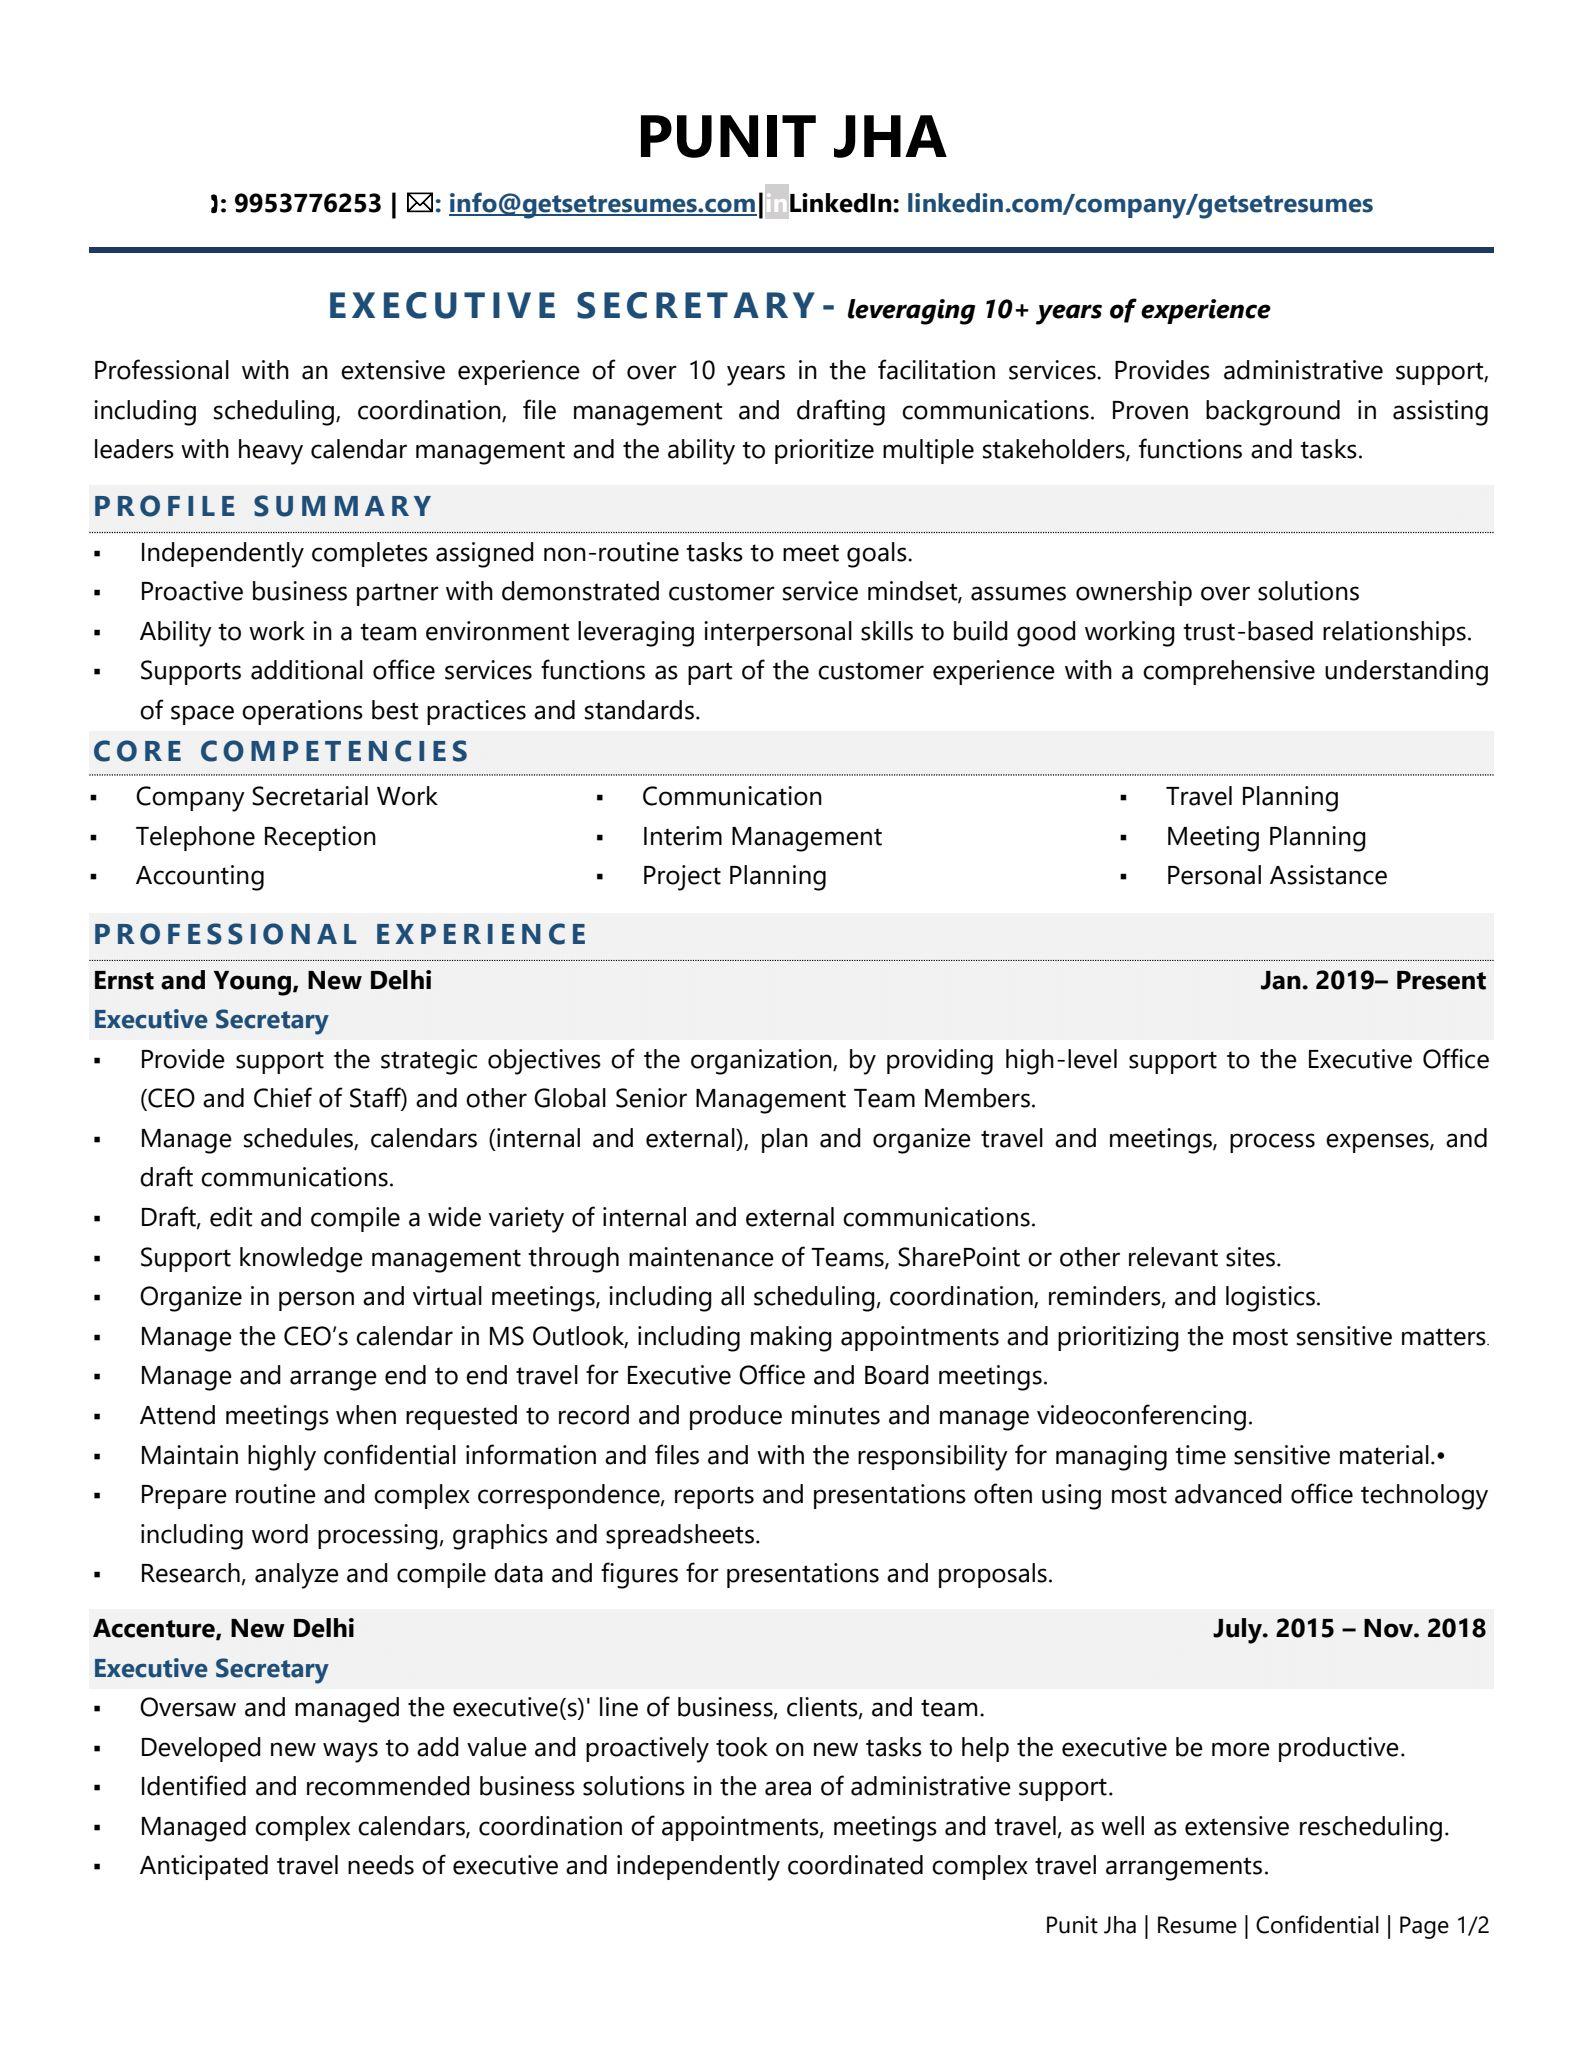 Executive Secretary - Resume Example & Template